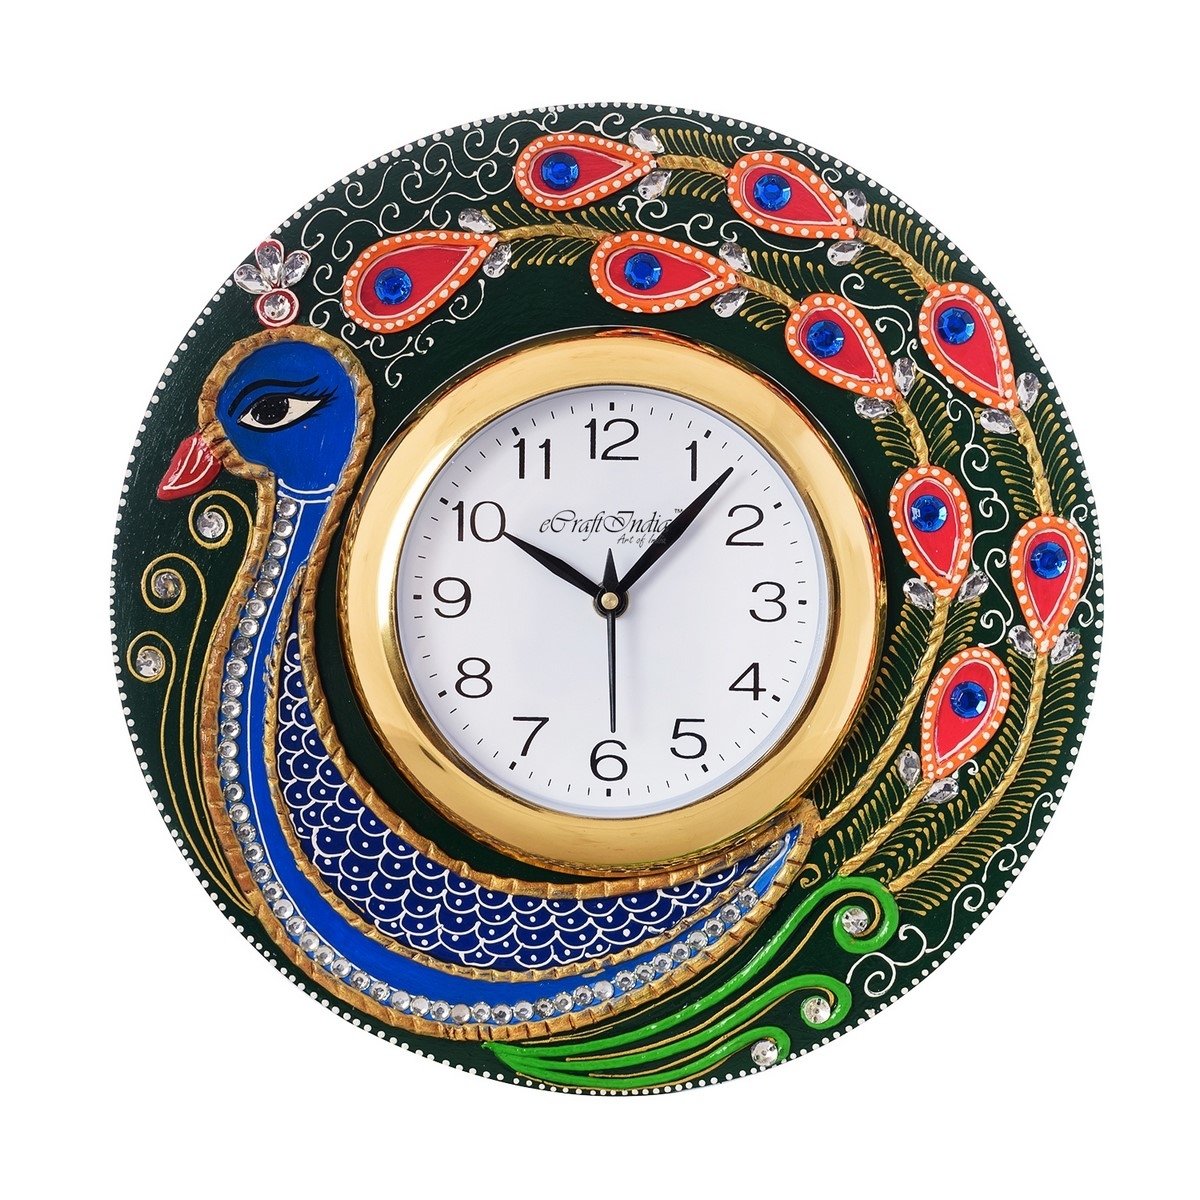 Peacock Design Handicrafted Decorative Papier-Mache Wooden Wall Clock